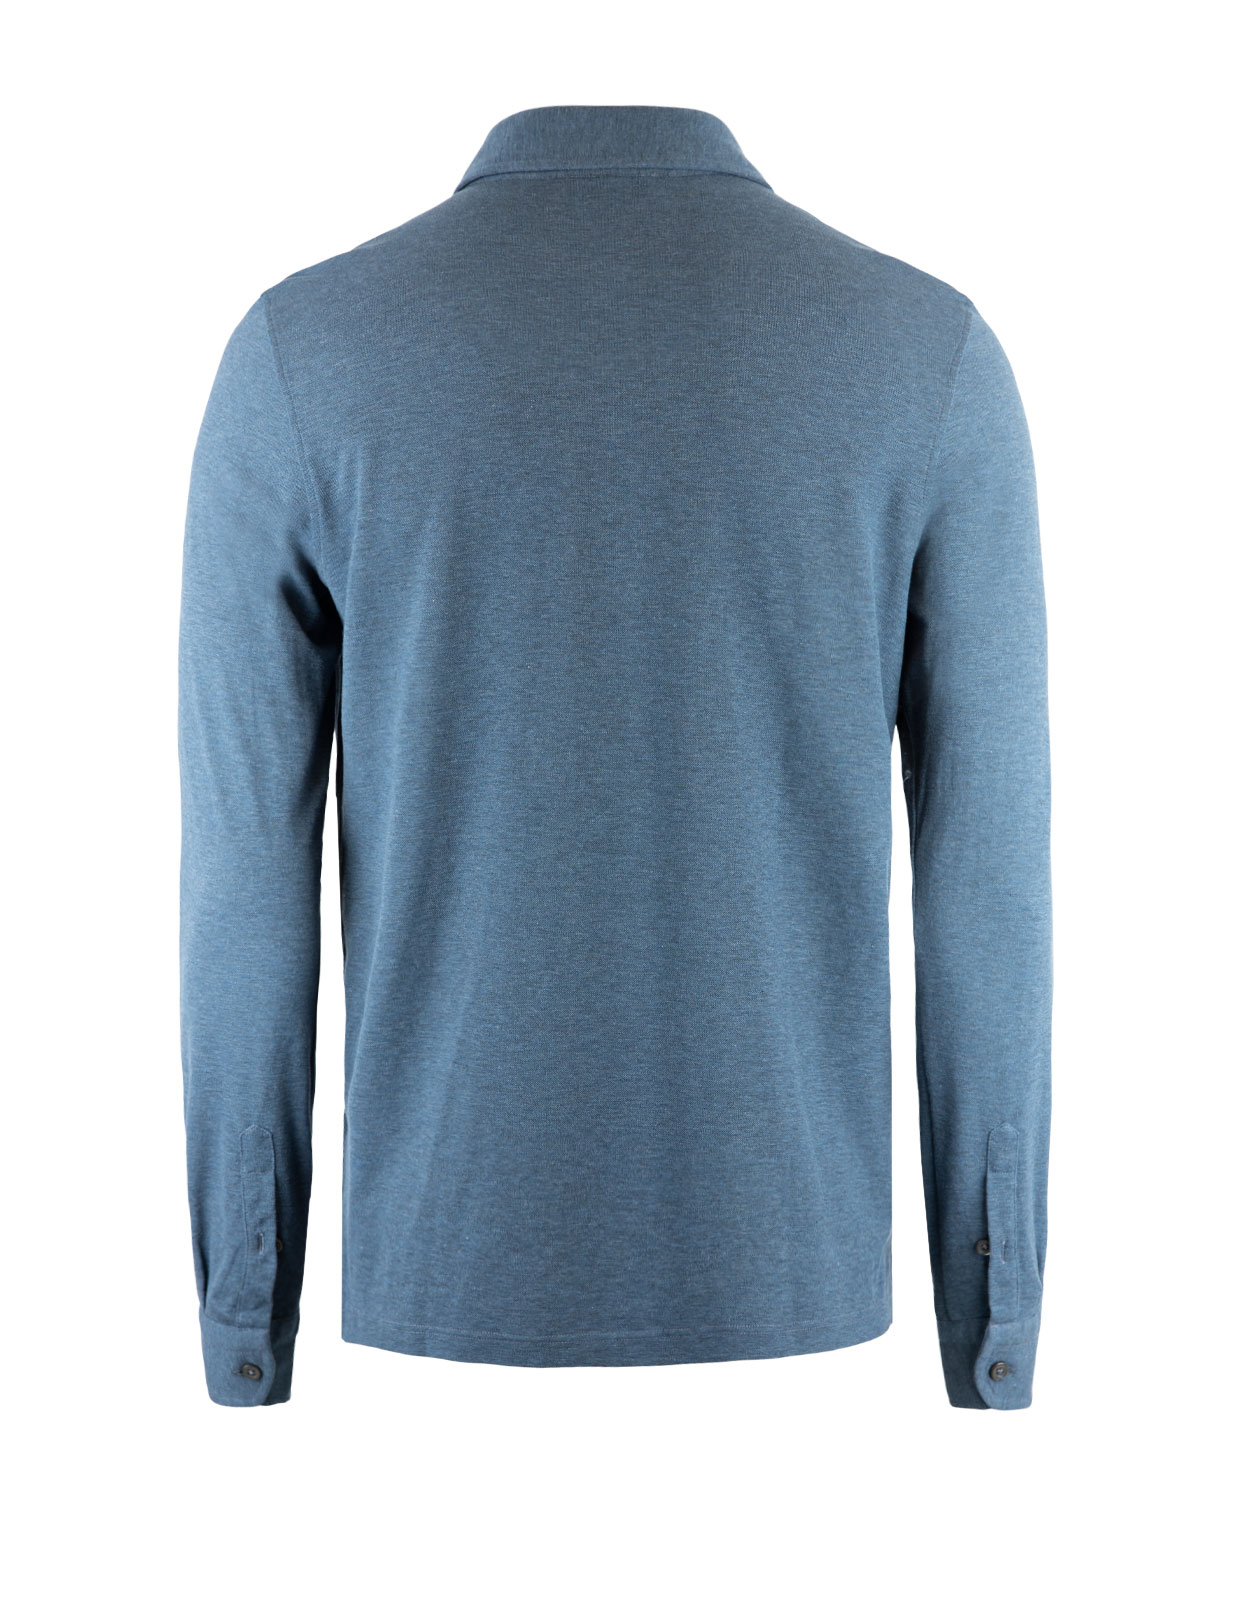 Popover Polo Jersey Shirt Blue Melange Stl 56